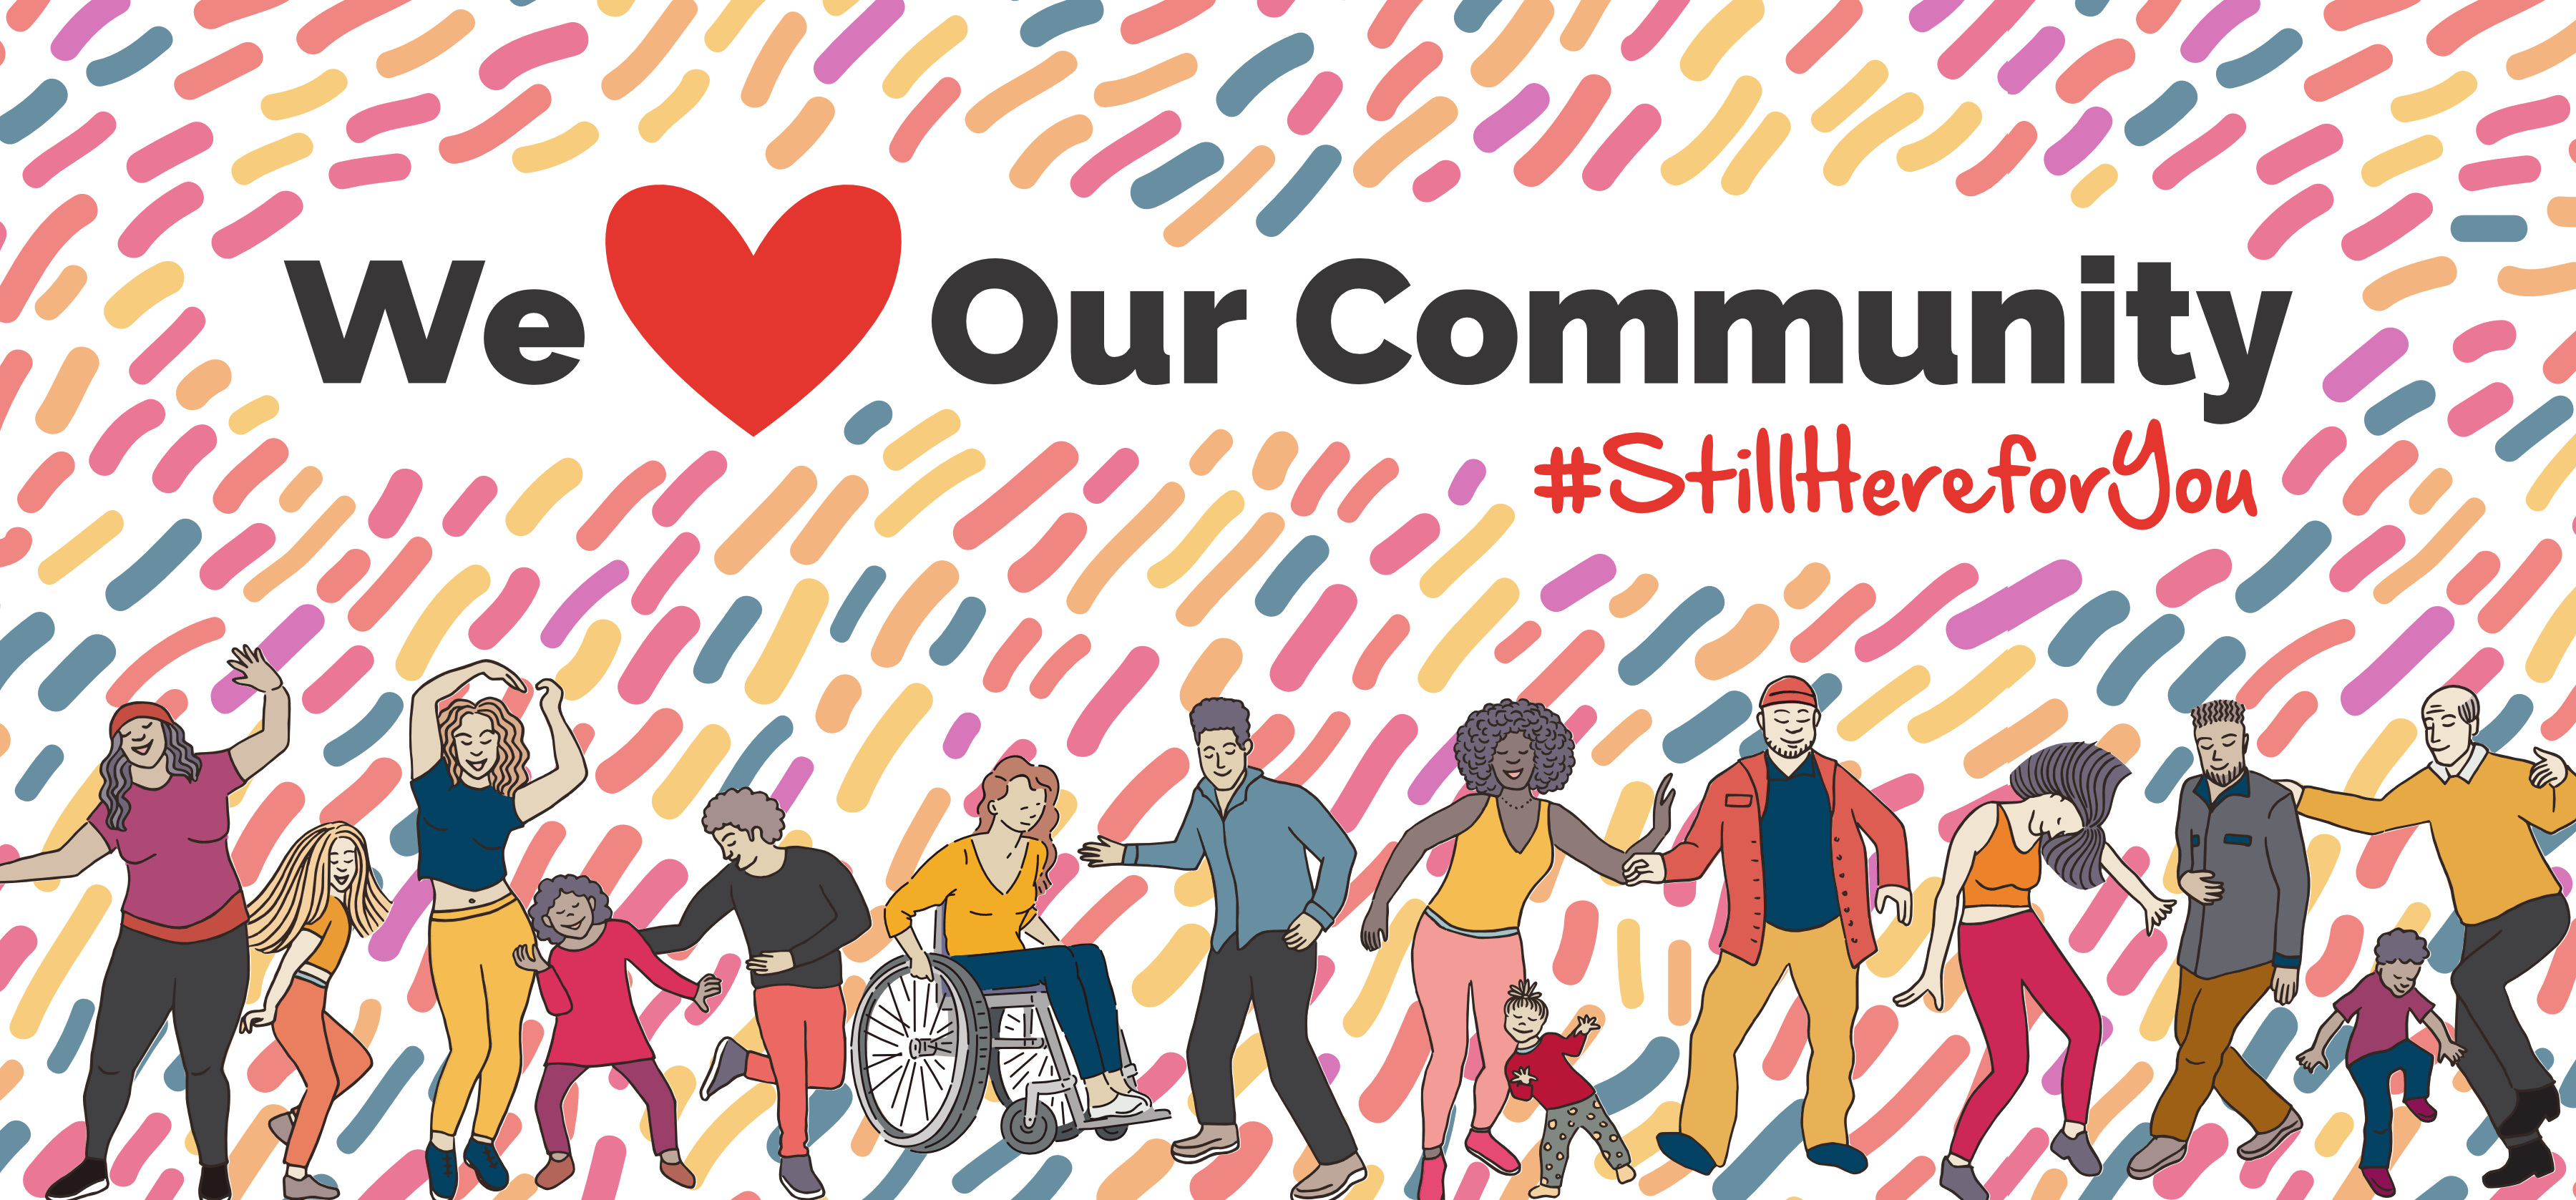 We love our community. #stillhereforyou